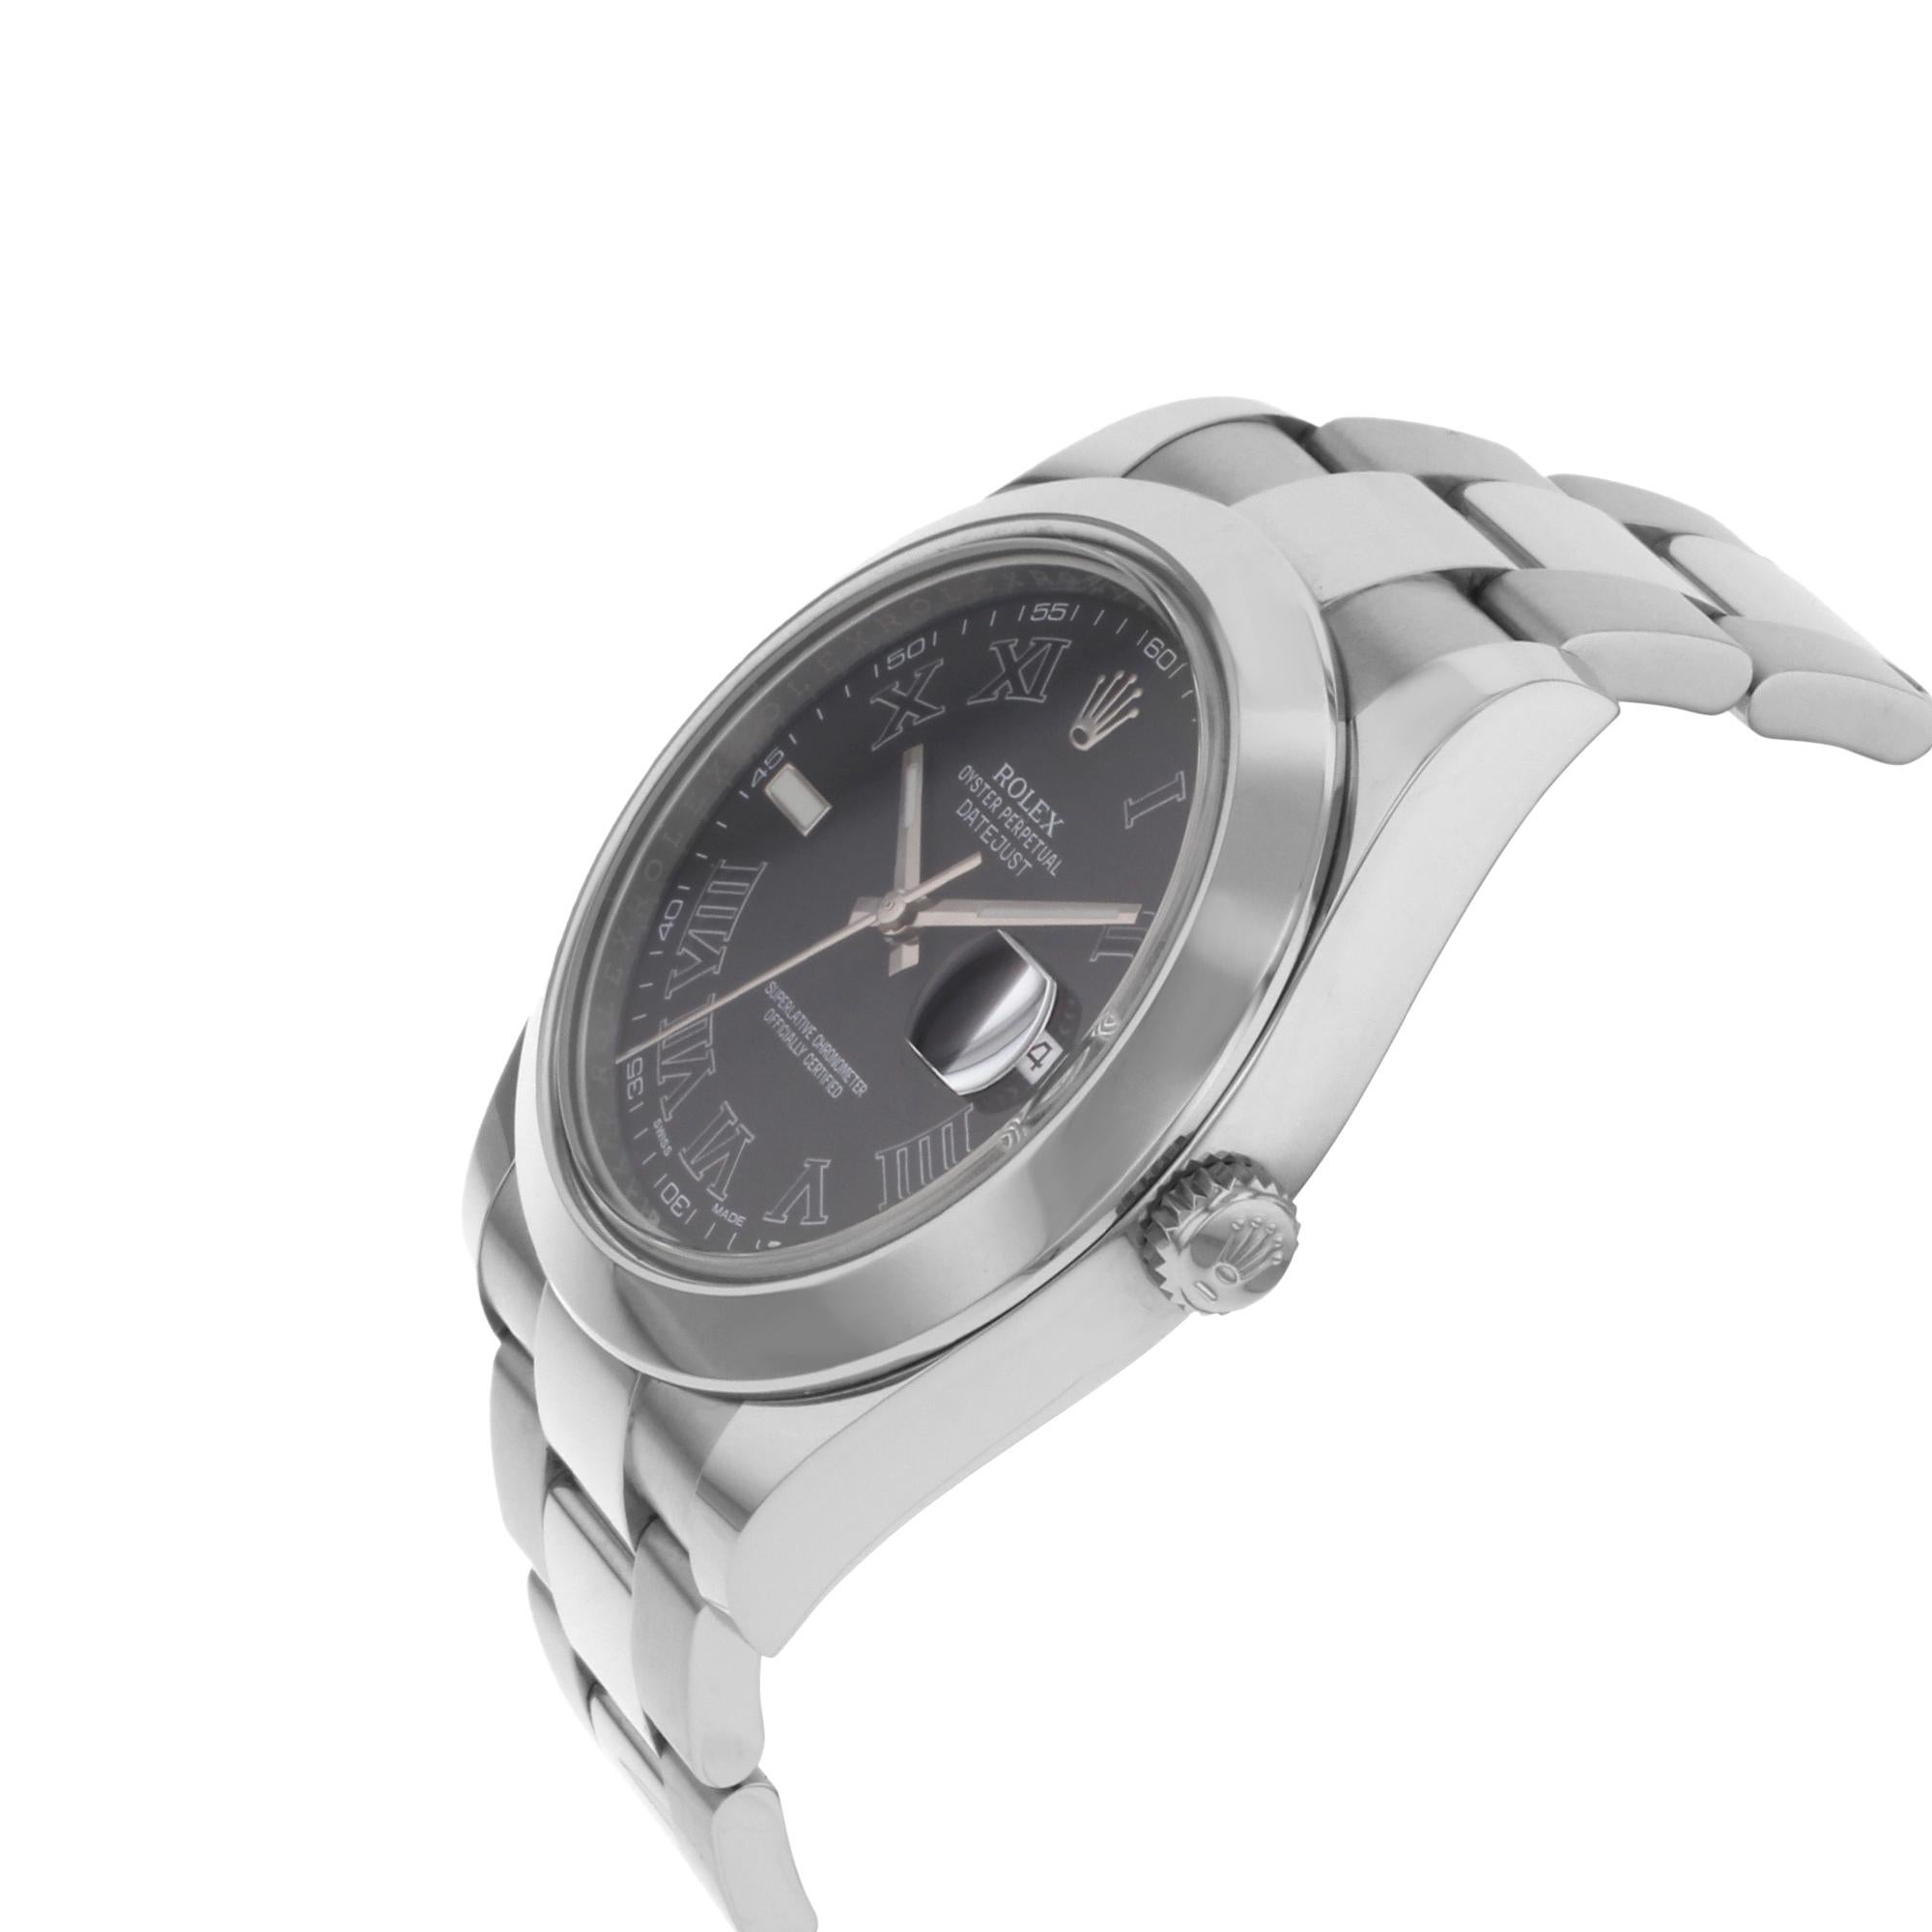 Rolex Datejust II 116300 bkrio Stainless Steel Automatic Men's Watch